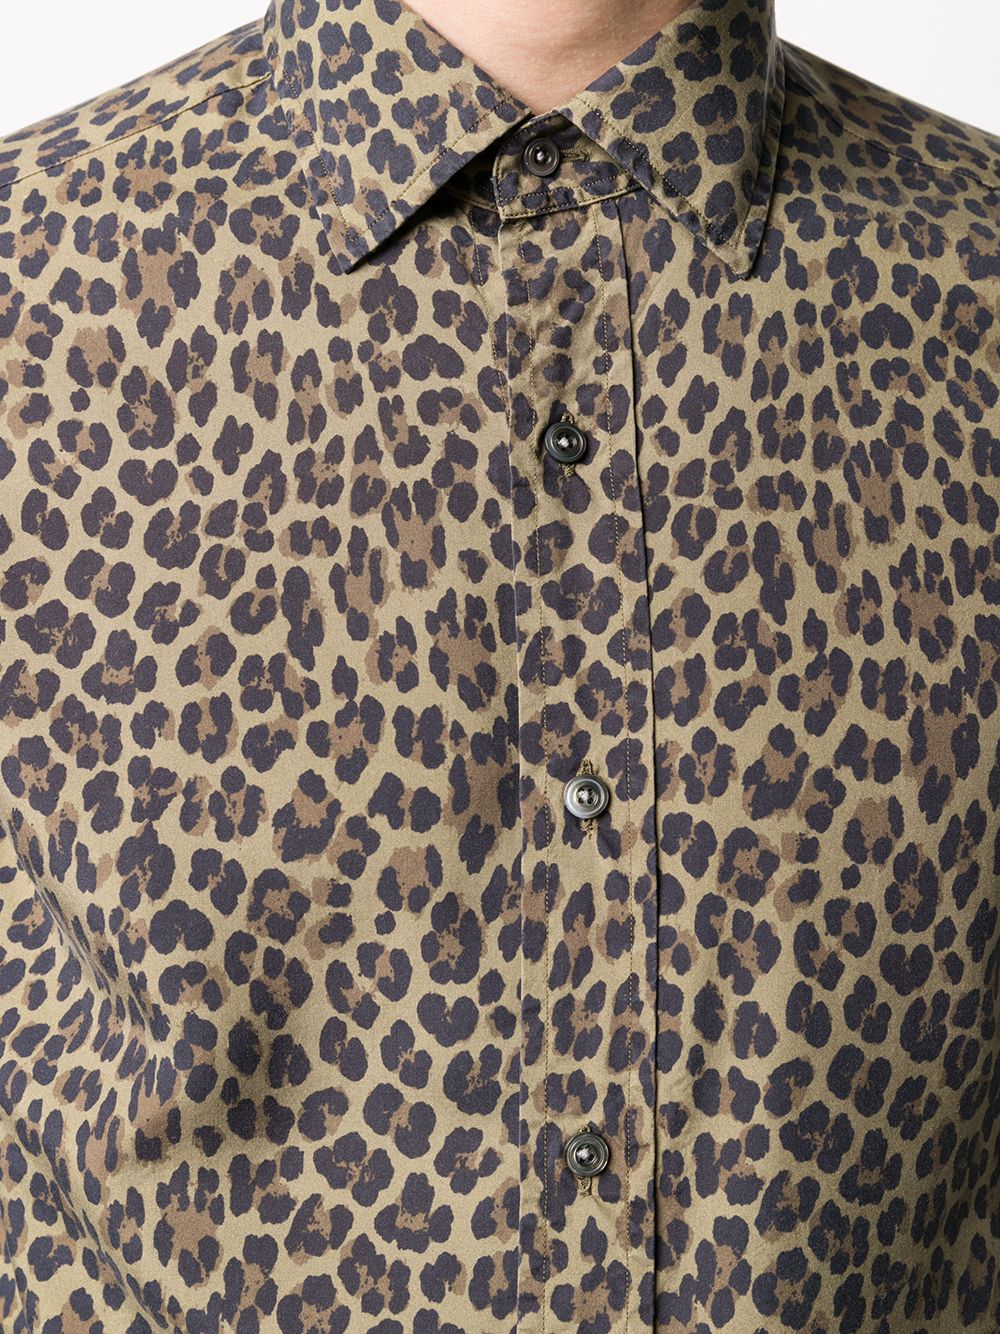 фото Tom ford рубашка с леопардовым принтом